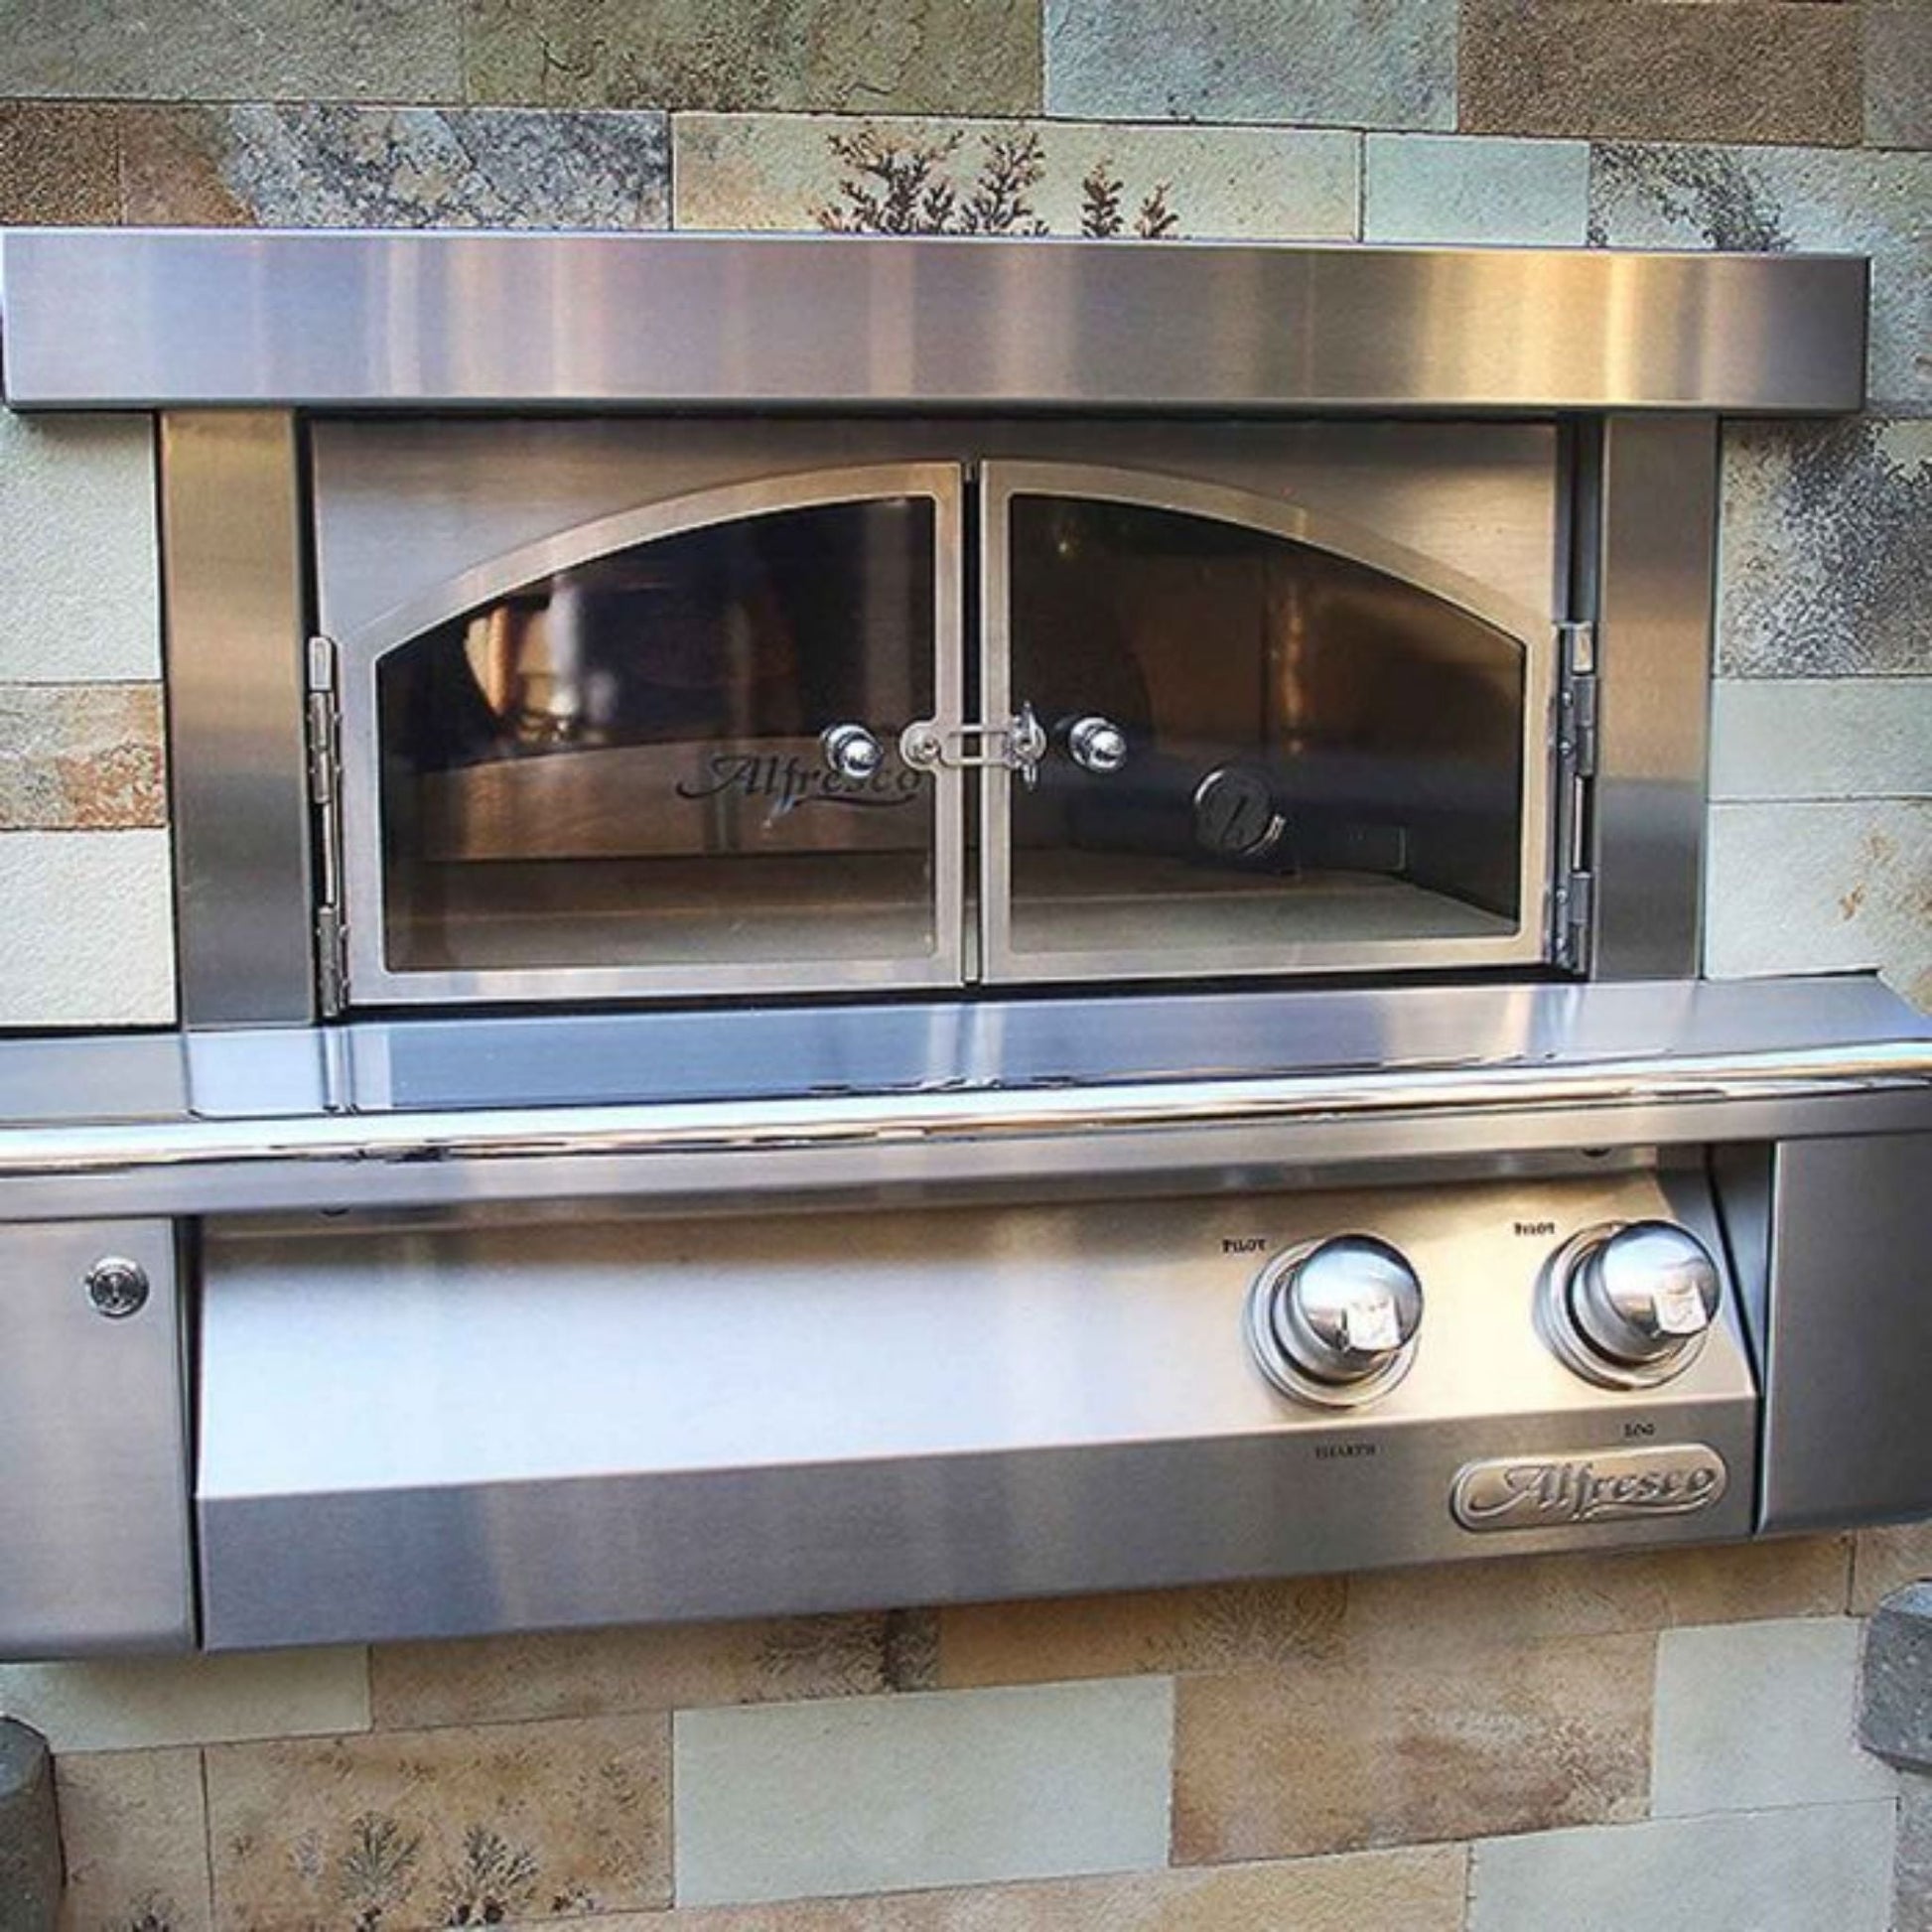 Alfresco 30" Jet Black Gloss Liquid Propane Pizza Oven for Built-in Installations